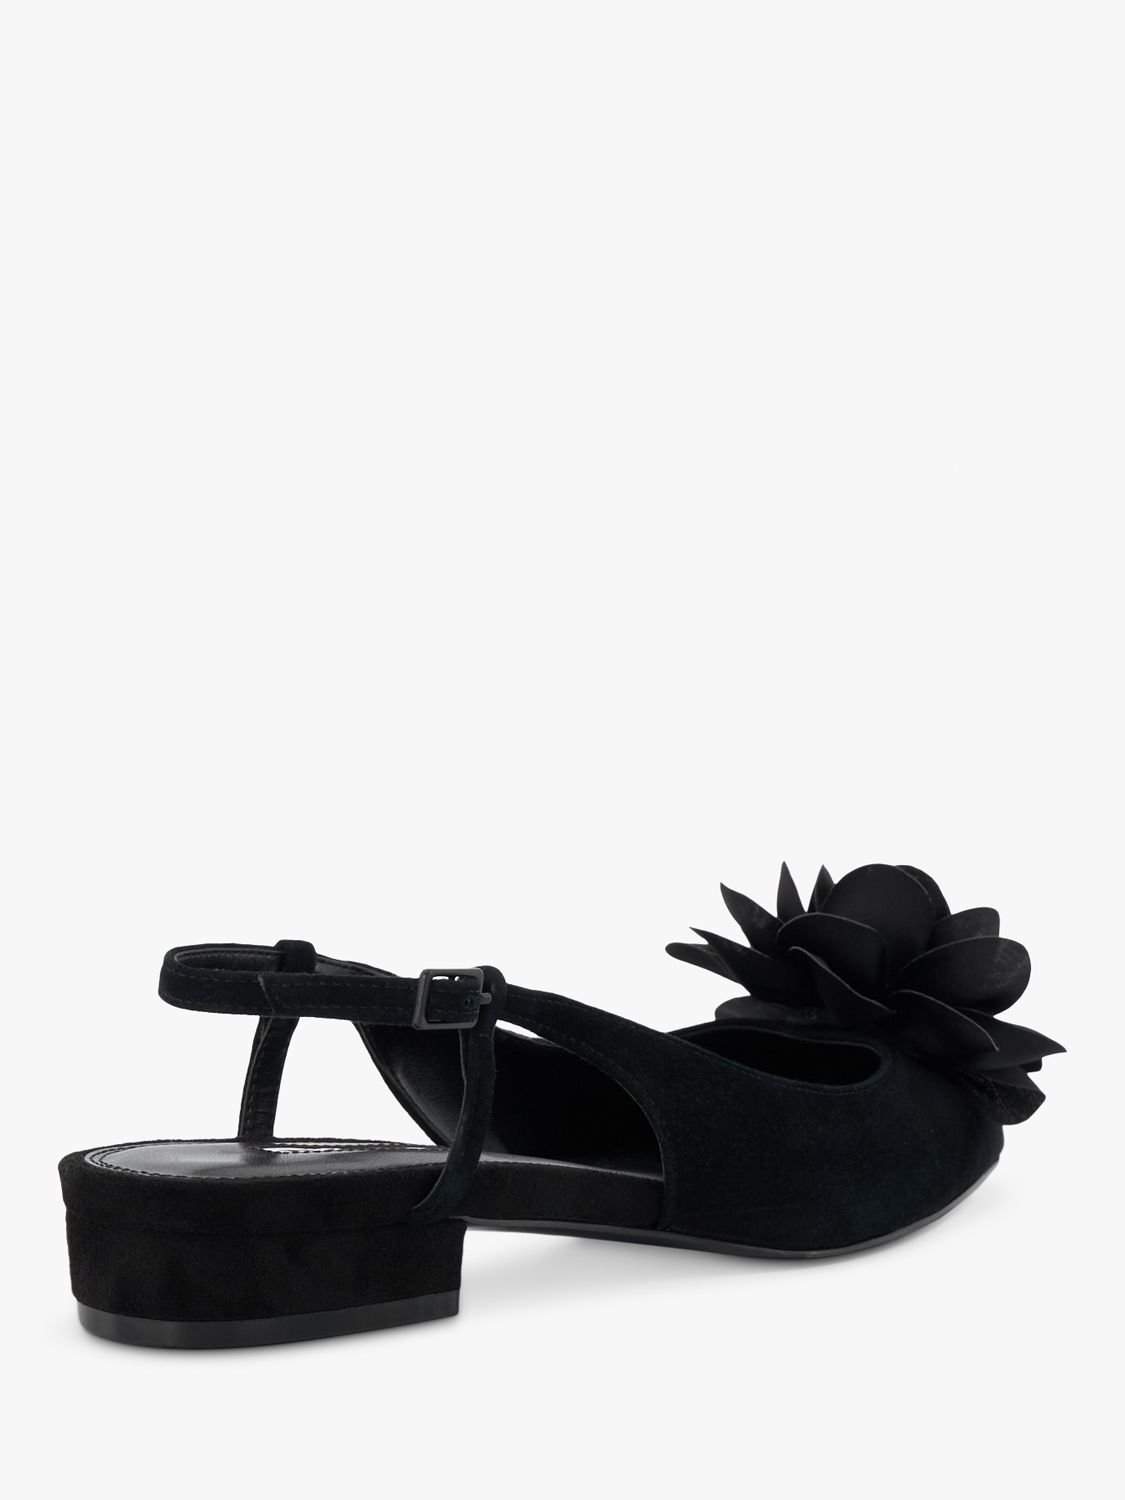 Dune Harperr Suede Ballerina Shoes, Black, 3